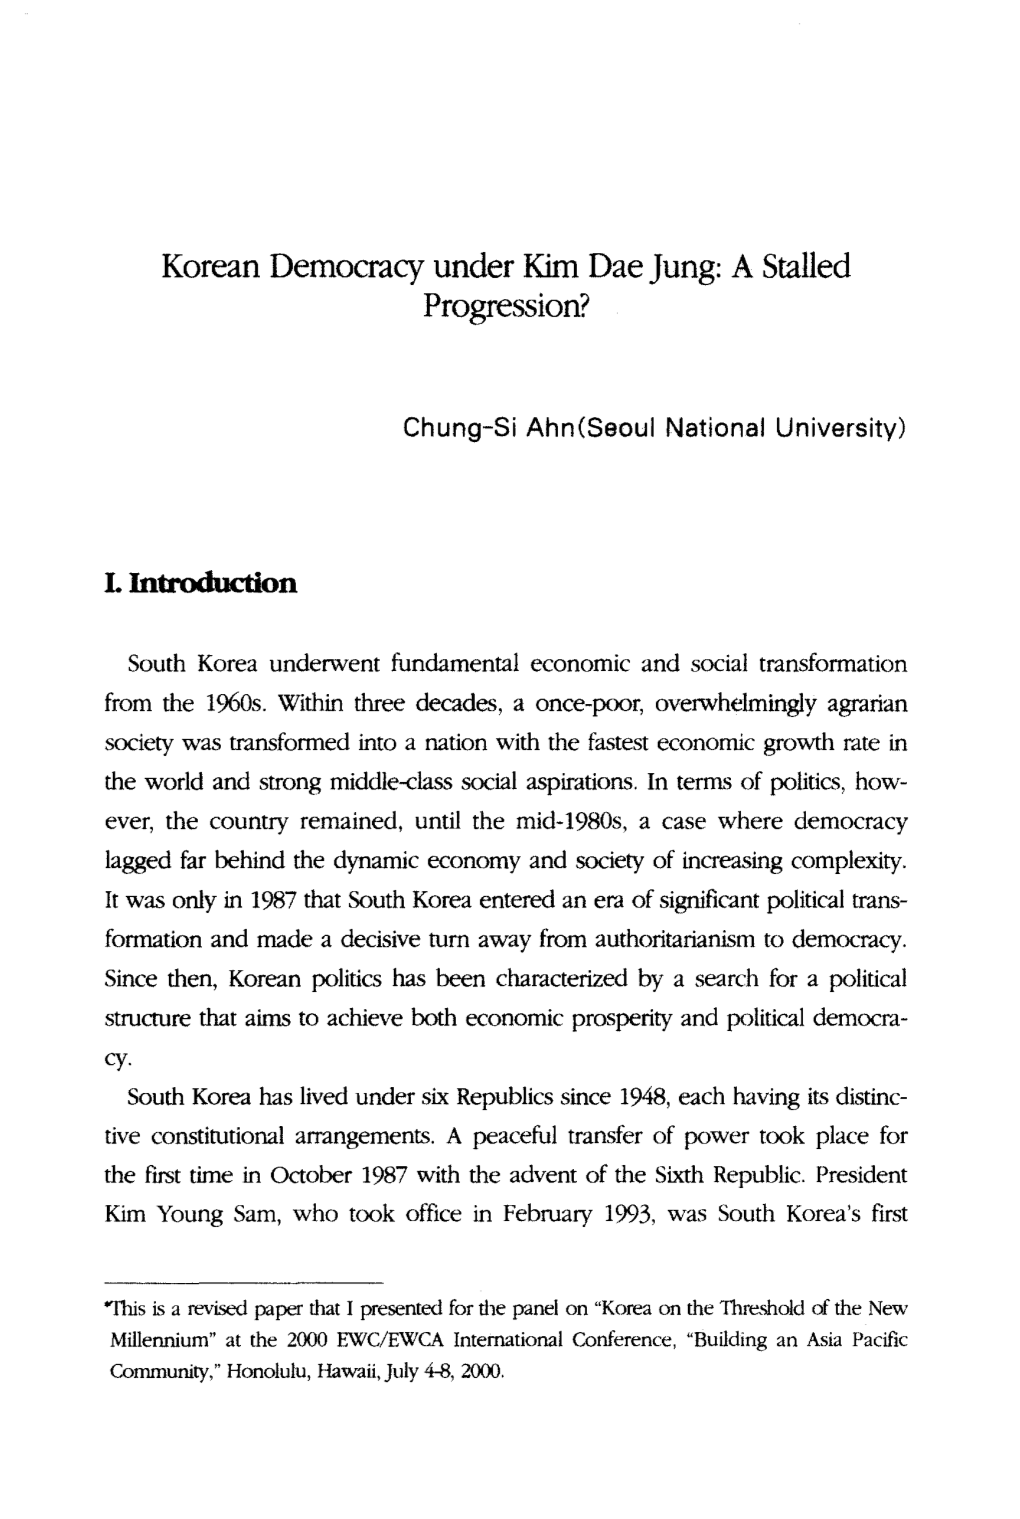 Korean Democracy Under Kim Dae Jung: a Stalled Progression?